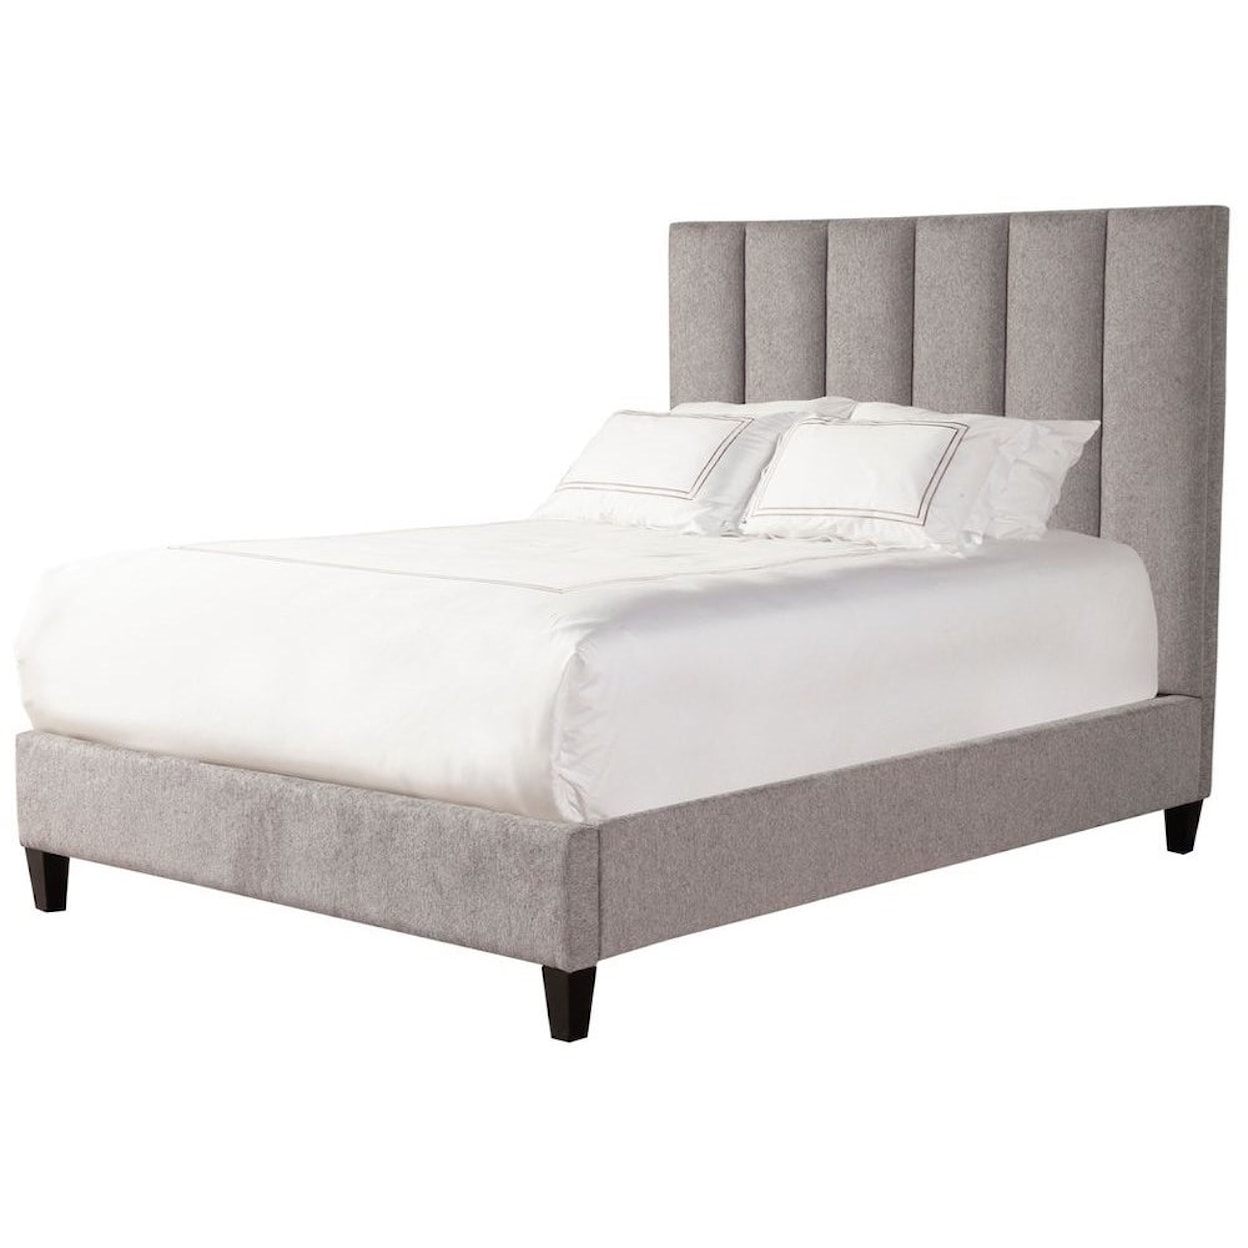 PH Avery King Upholstered Bed